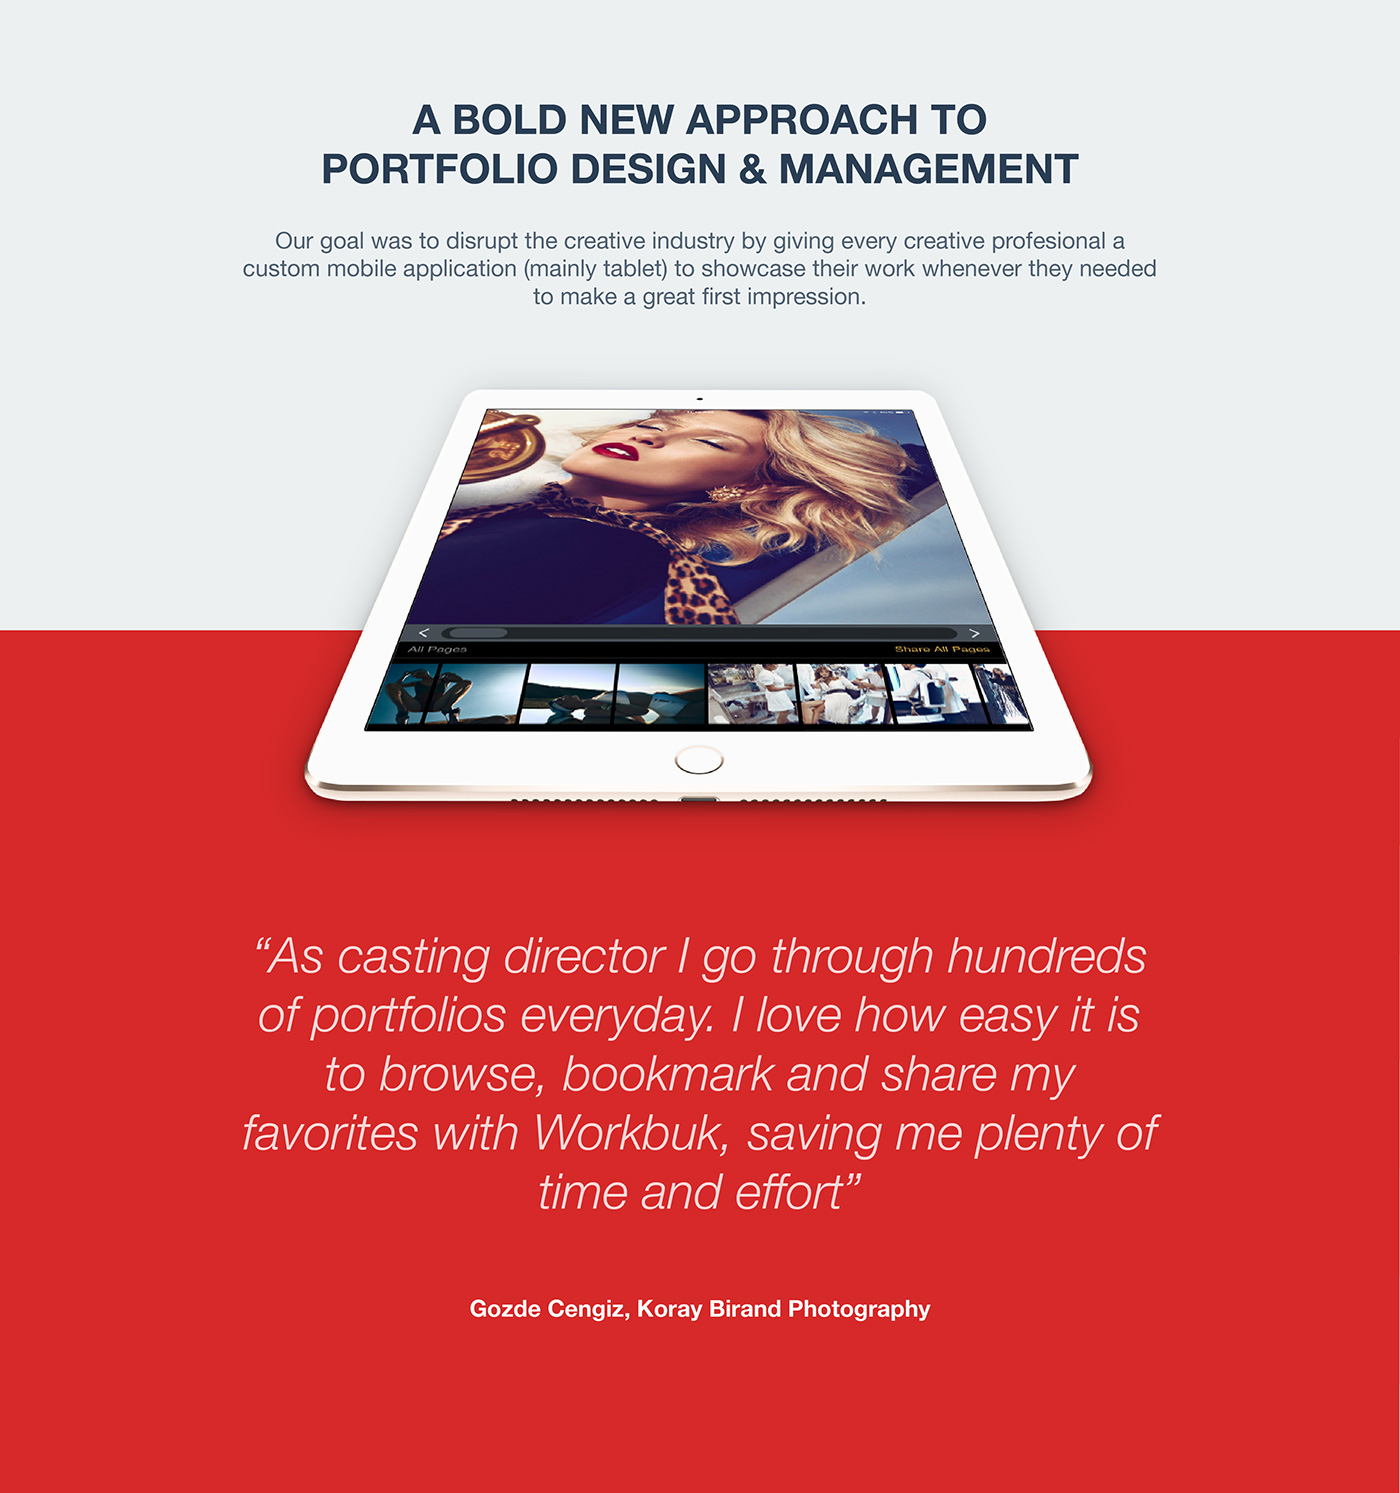 Workbuk workbook portfolio folio product Startup mobile app Website model